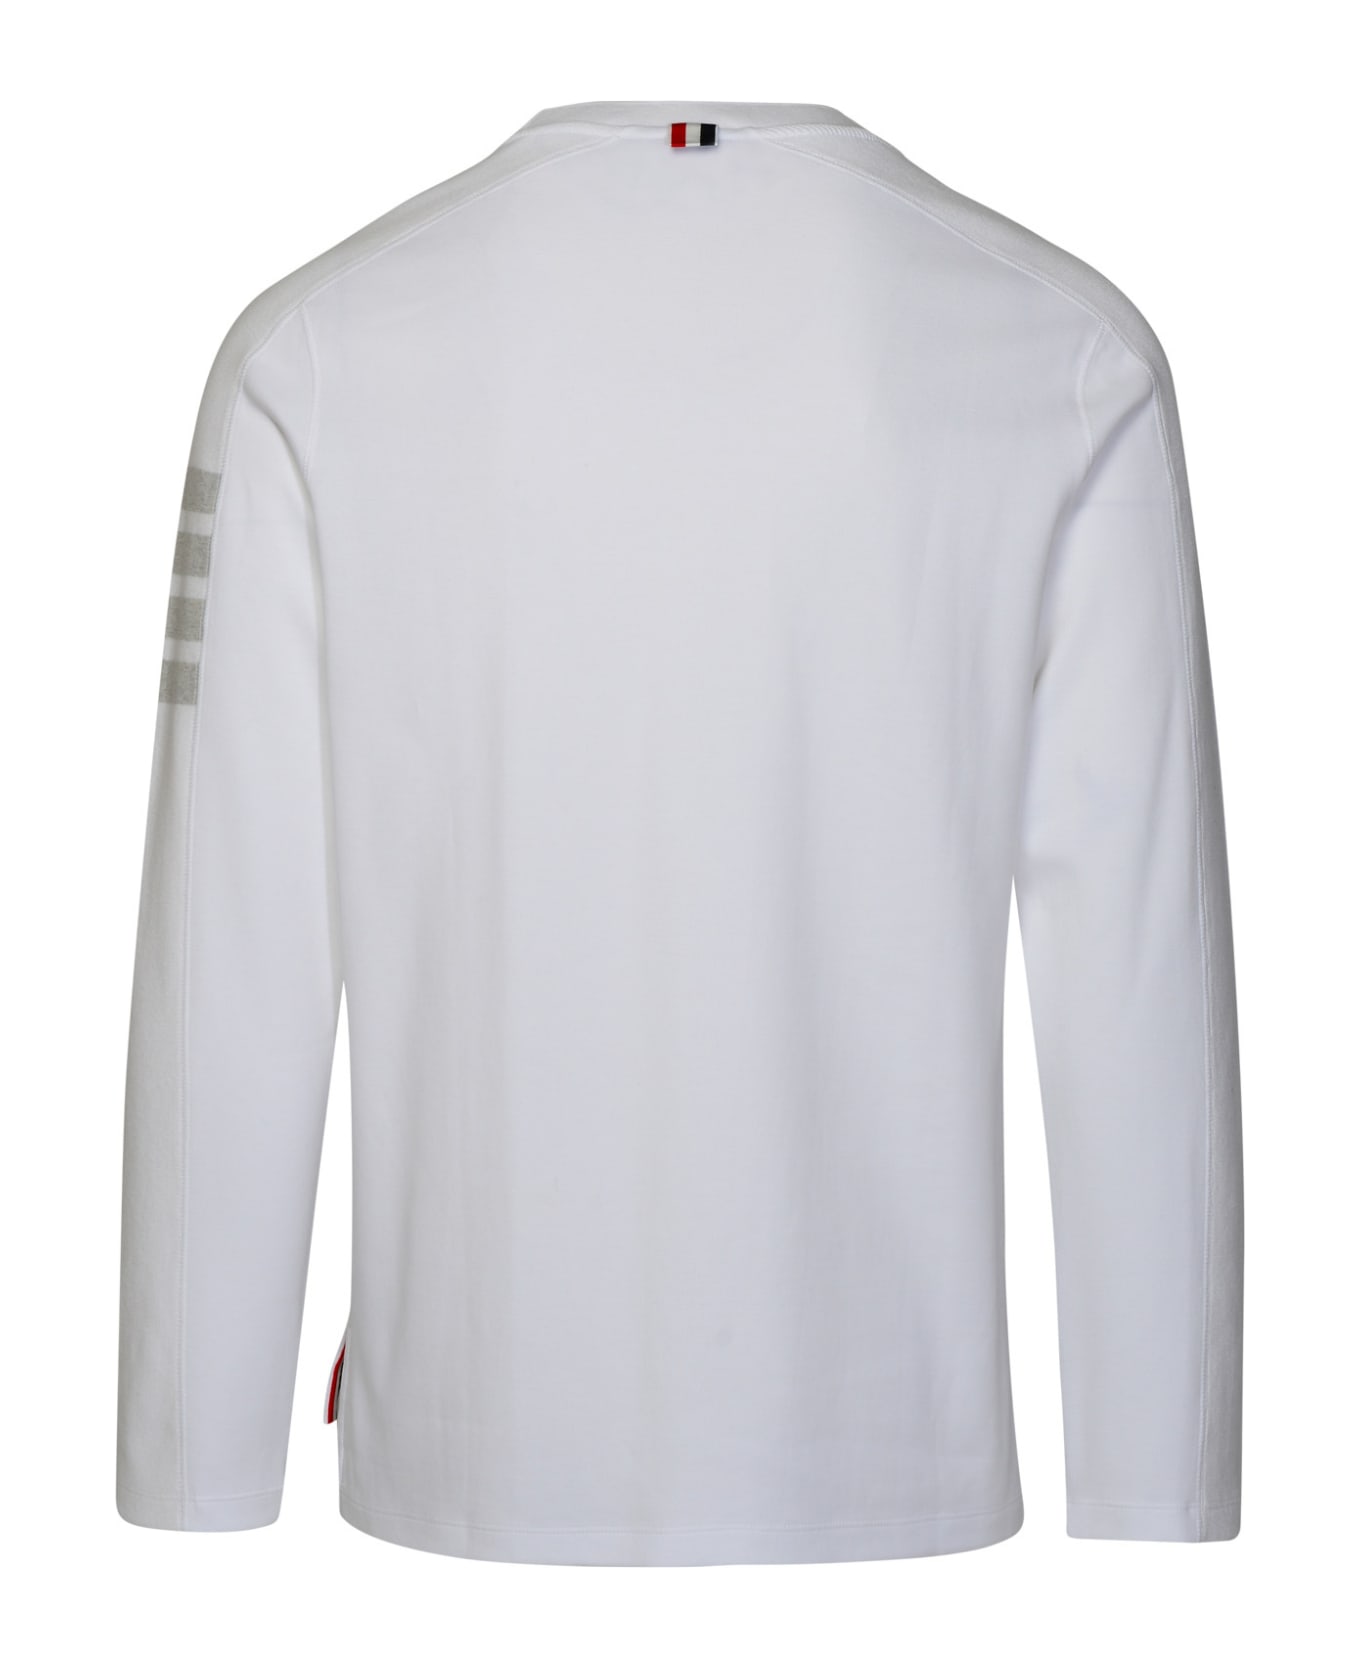 Thom Browne White Cotton Sweater - White